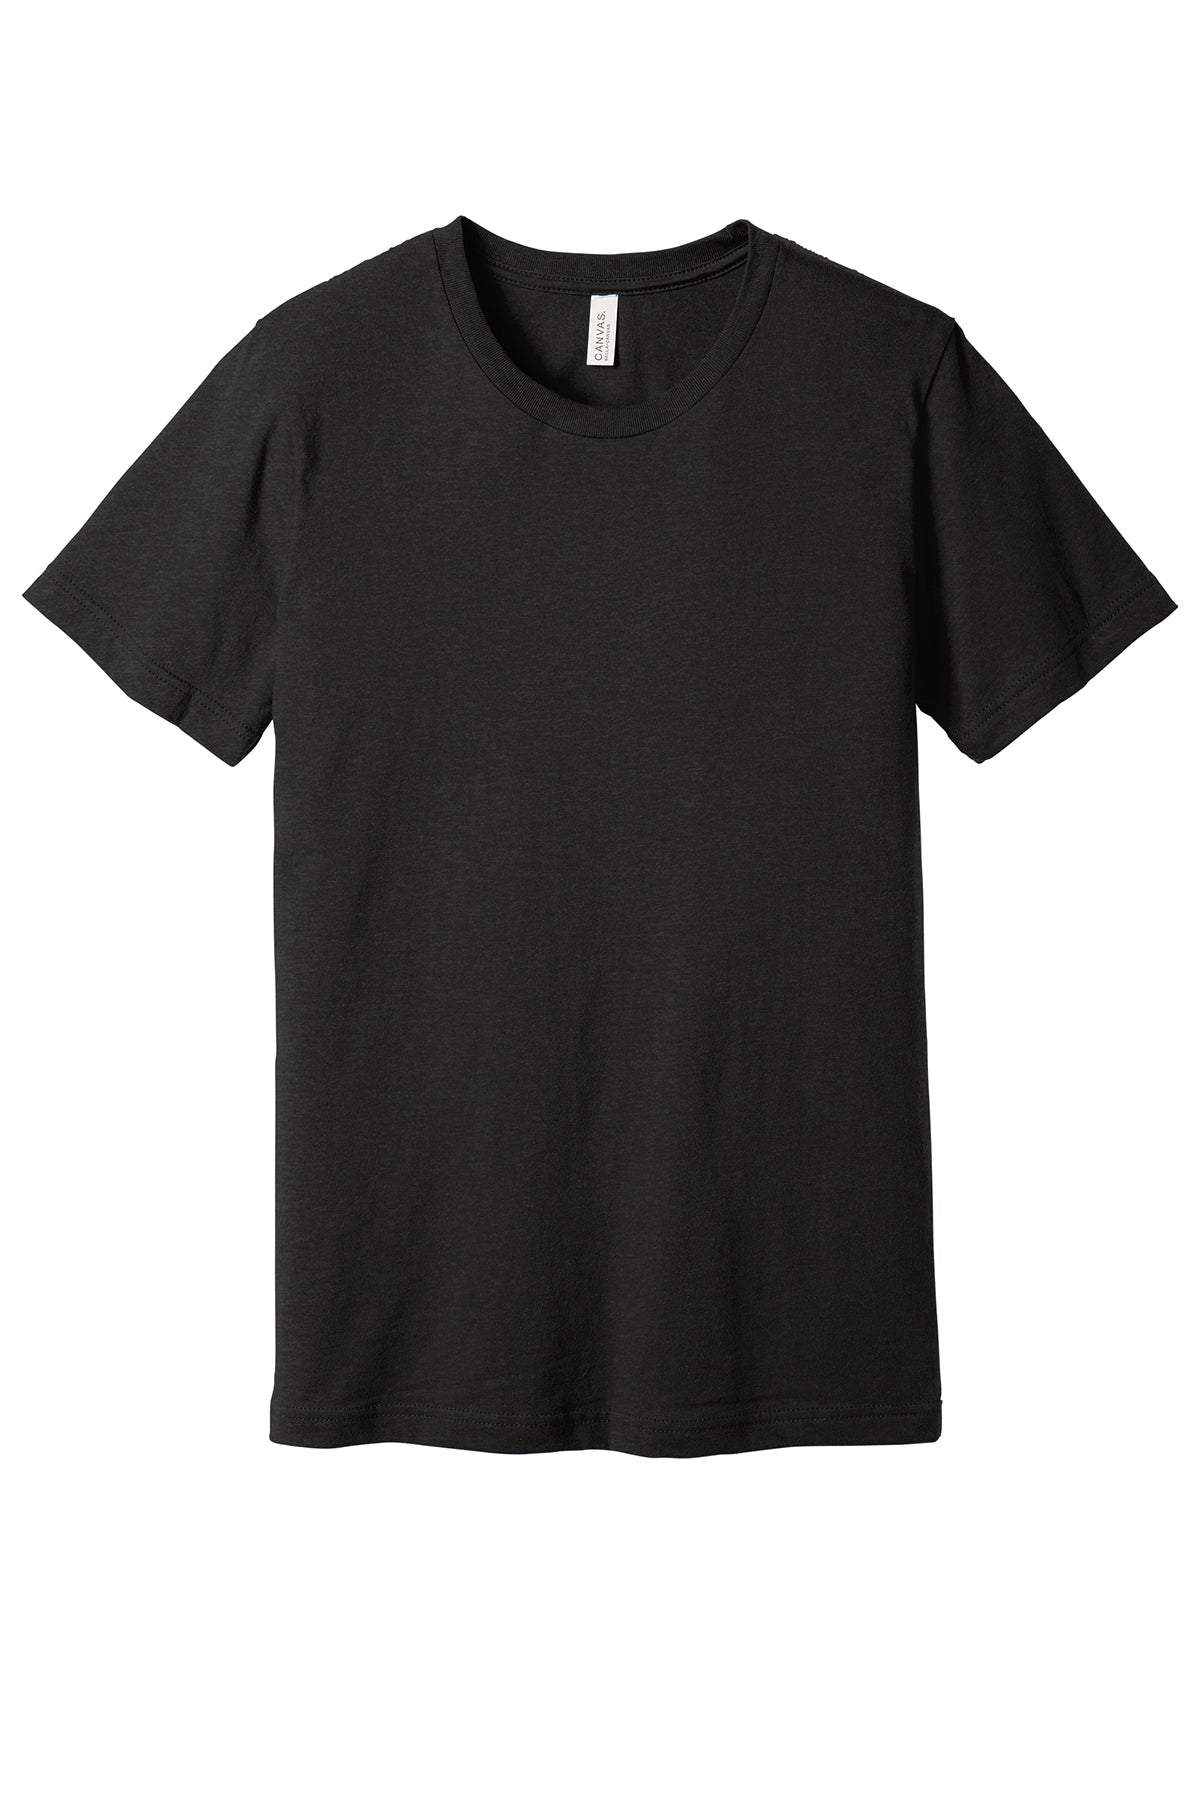 Bella Canvas Mens/Unisex Cotton Short Sleeve Shirts Black Heather